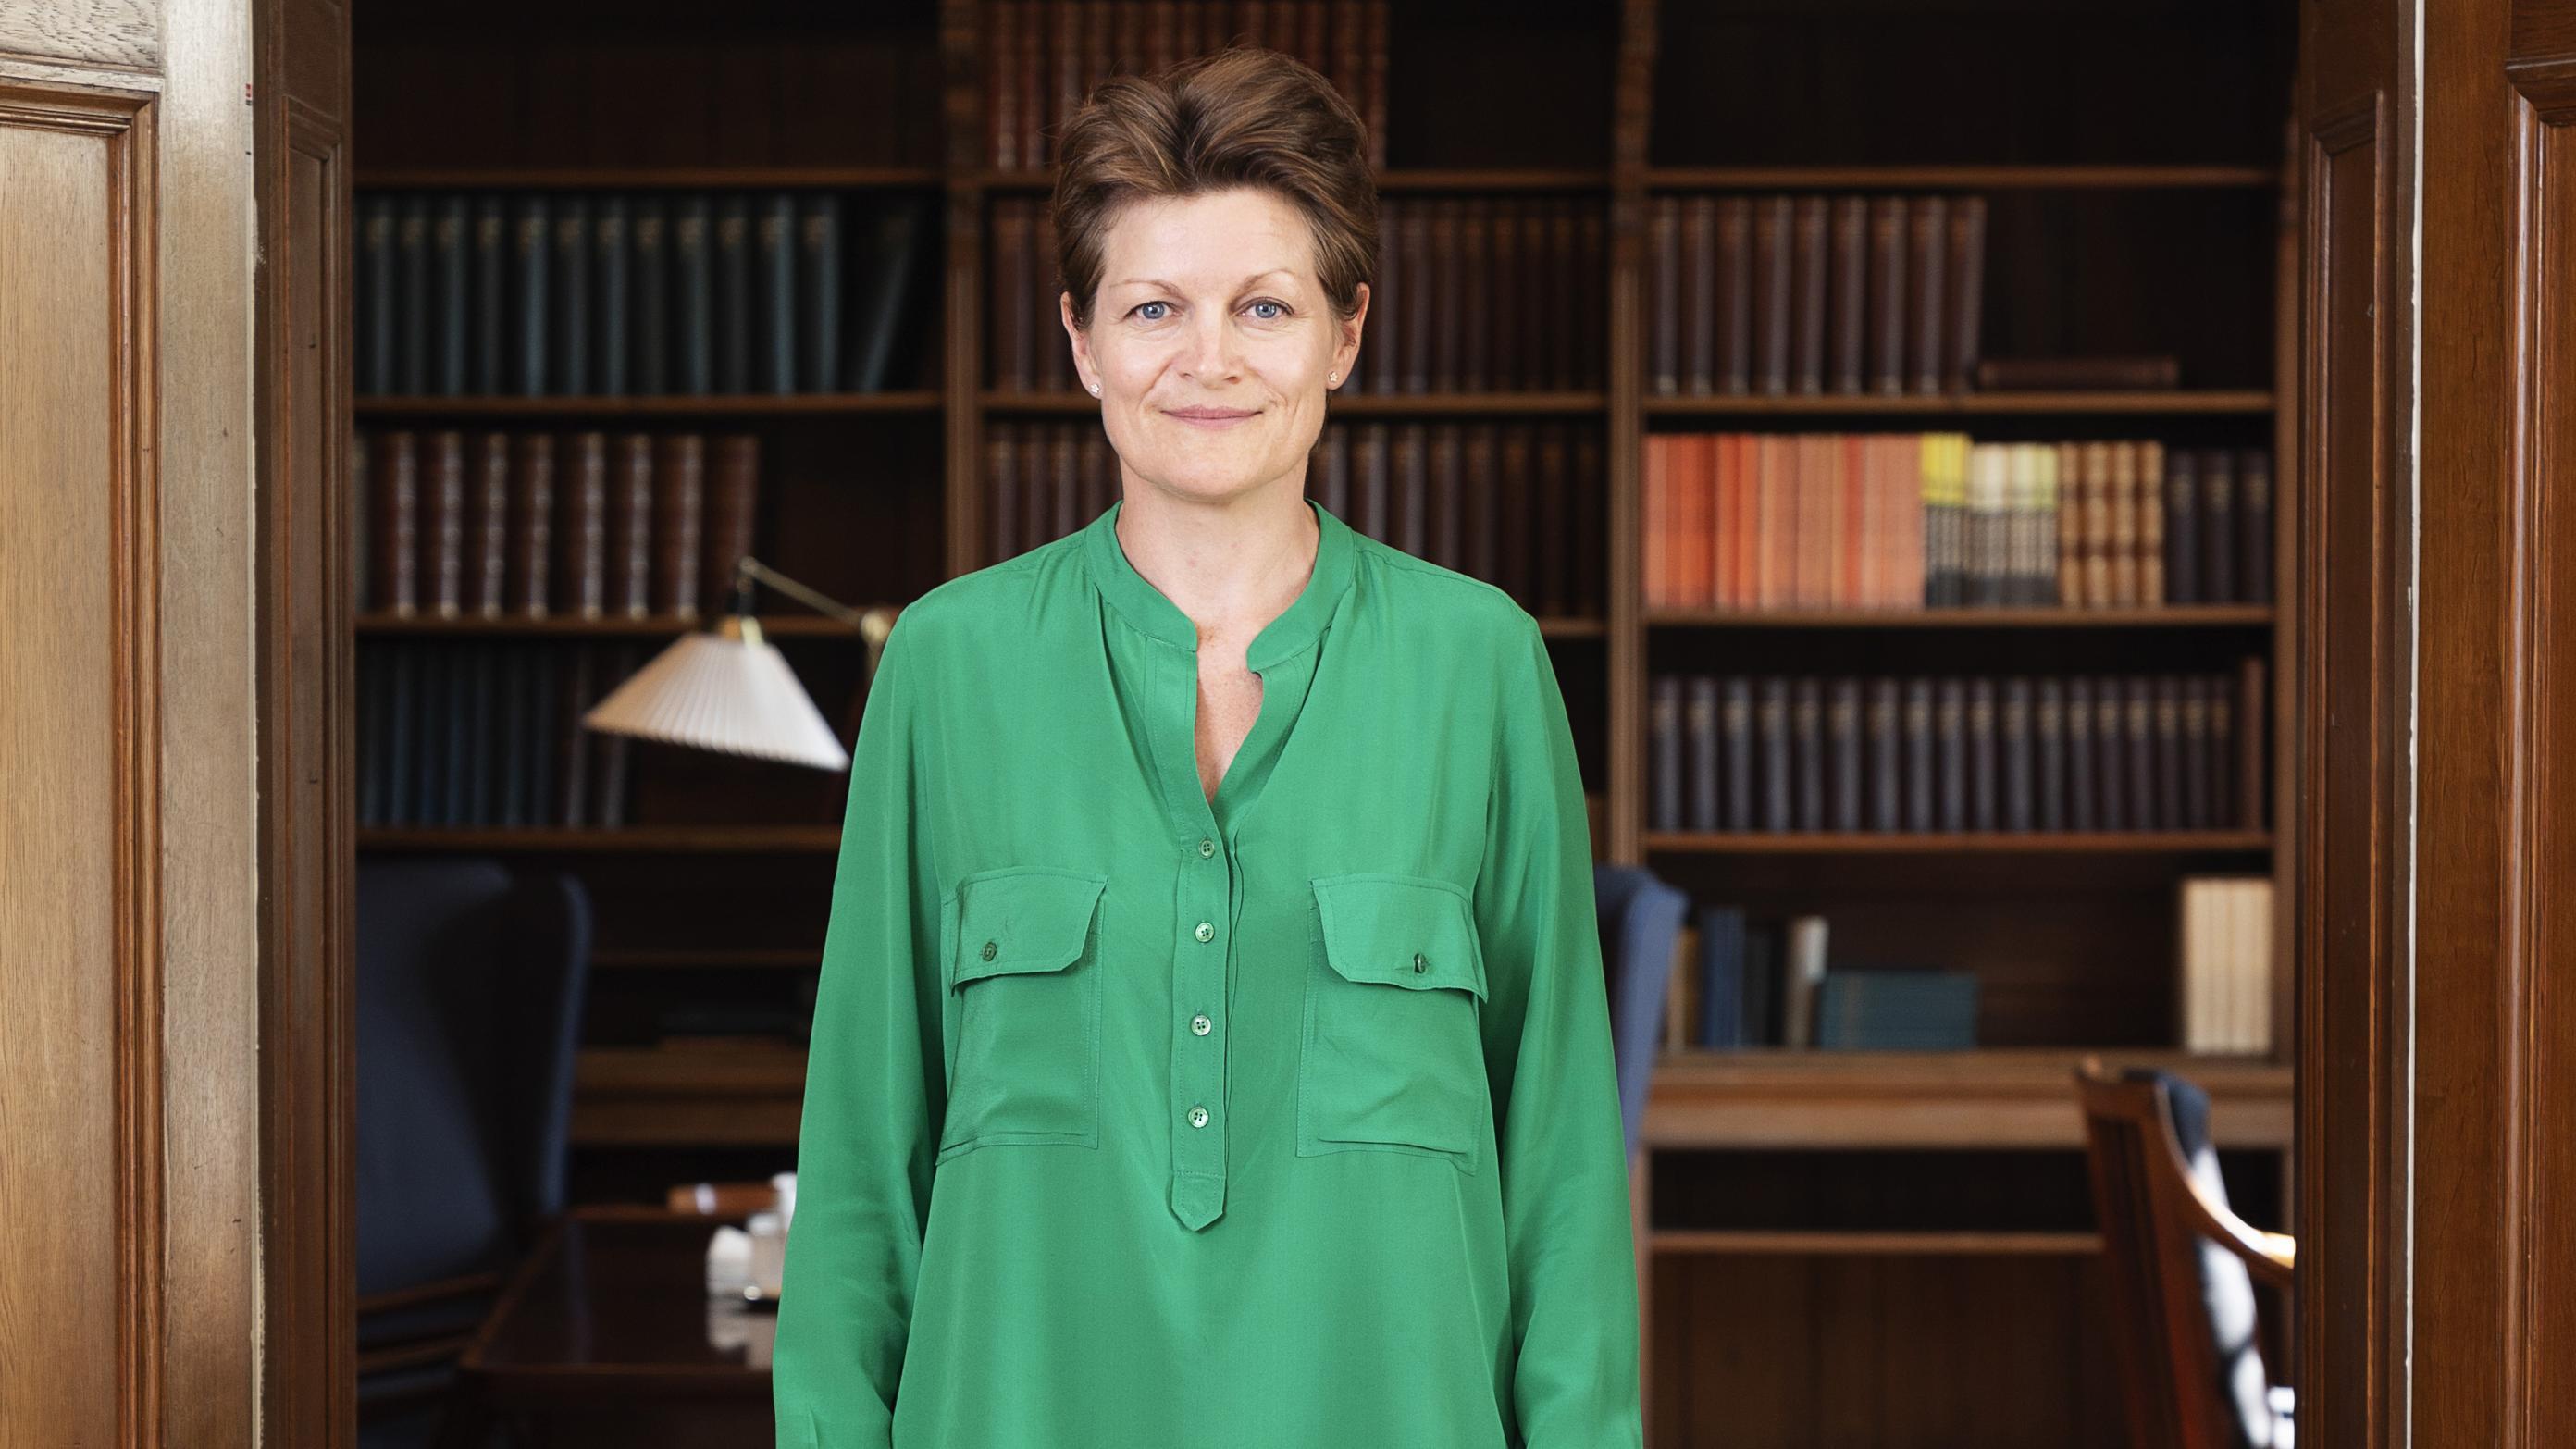 Formand for Lægeforeningen, Camilla Rathcke. Foto: Claus Bech